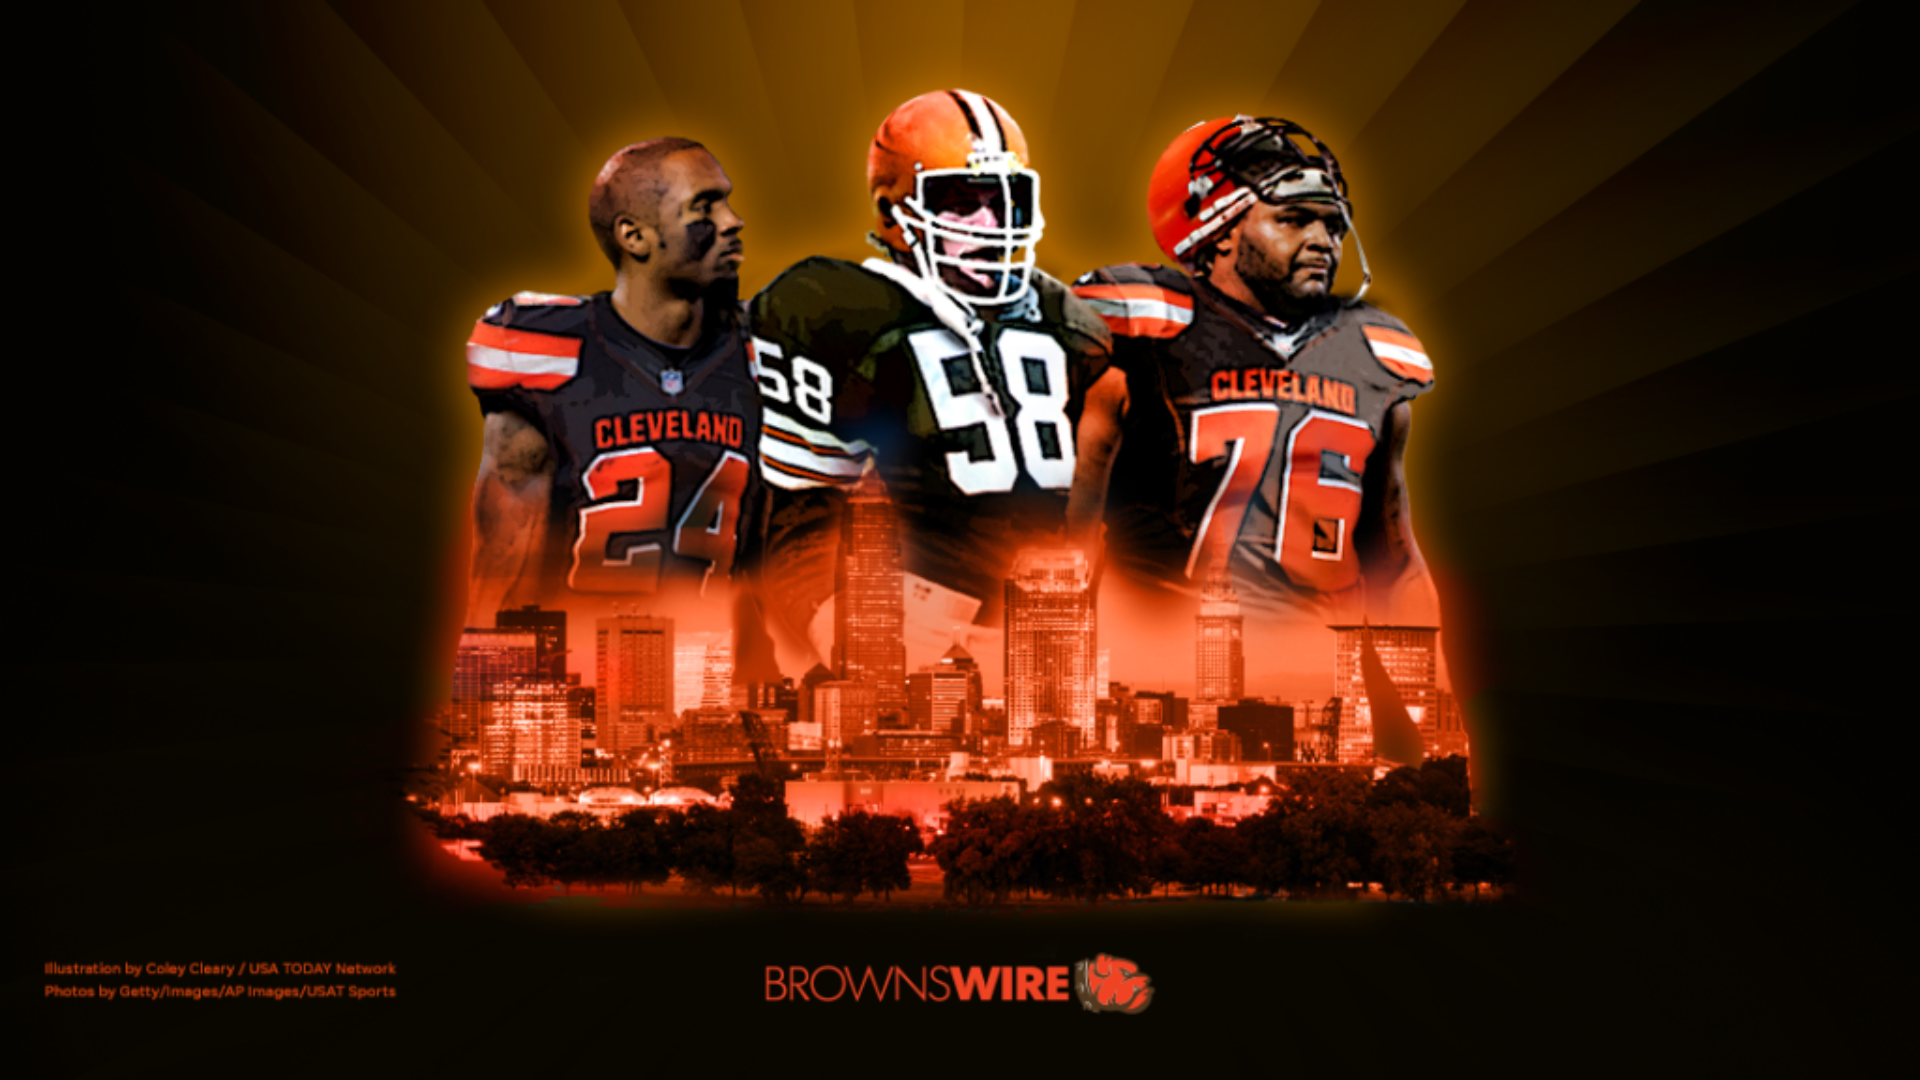 Cleveland Browns Wallpaper Cleveland Browns Background Download